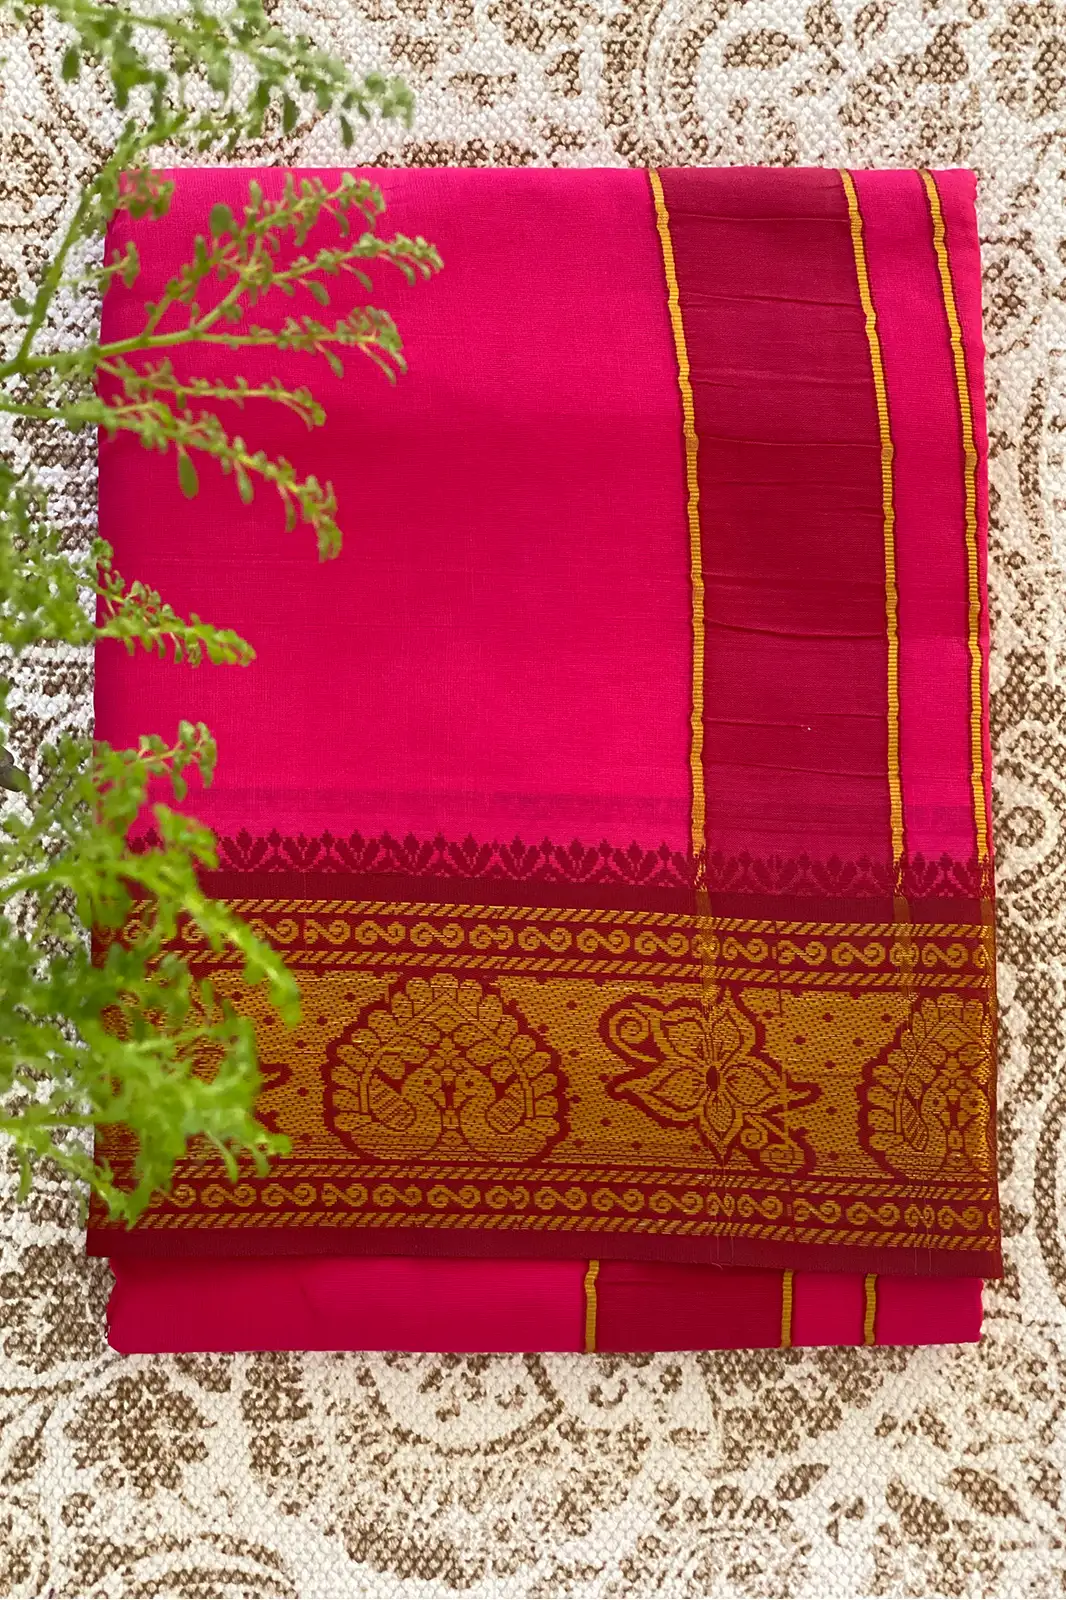 sodoaq pink cotton dhoti, organic cotton dhoti, dhoti indian clothing, cotton dhoti, best cotton dhoti, dhoti traditional, eco-friendly clothing store